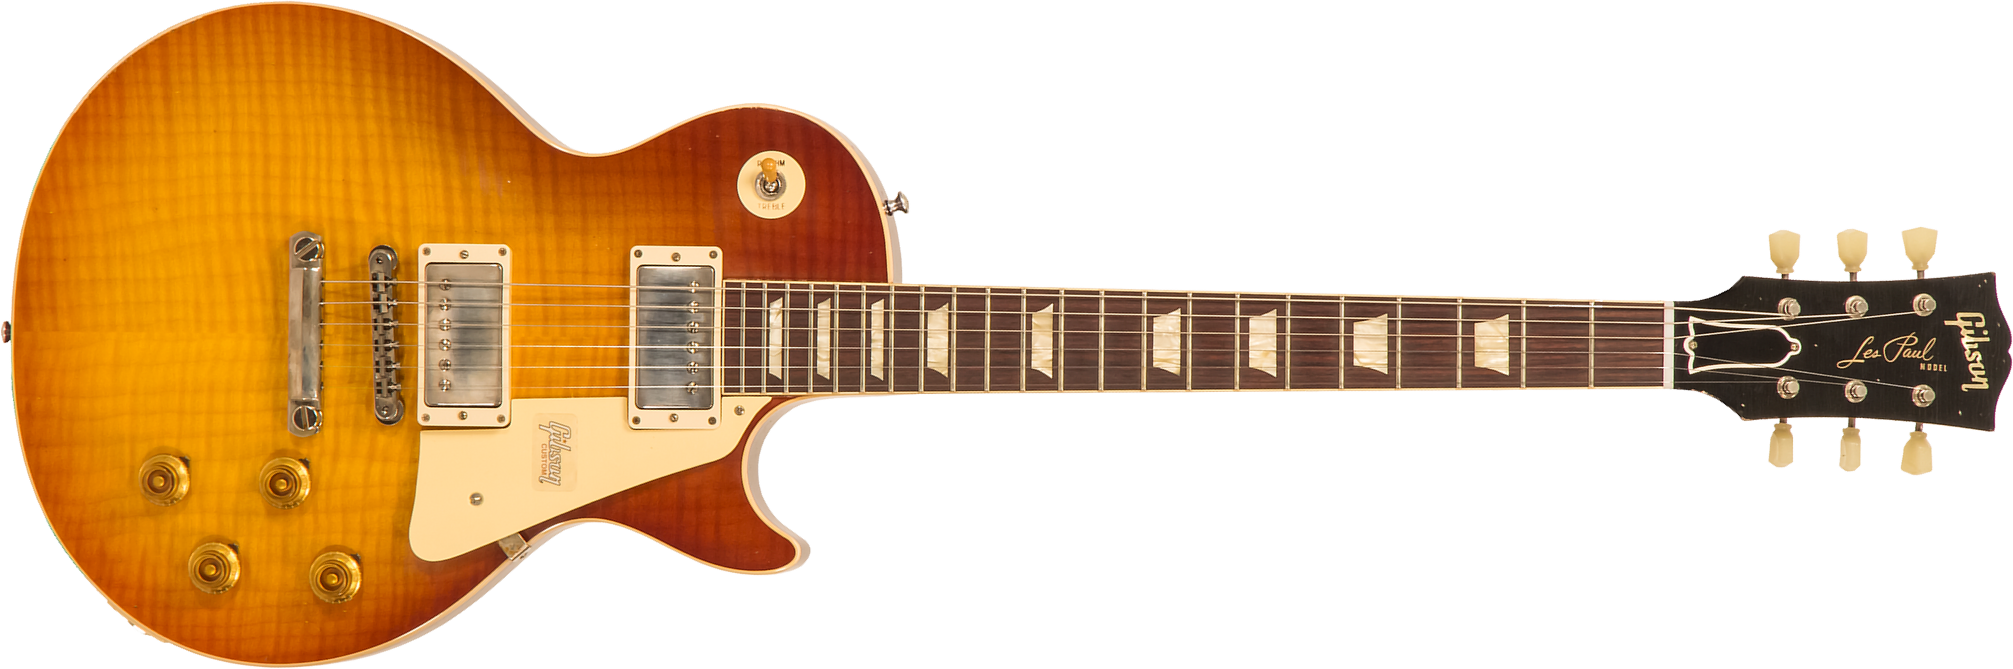 Gibson Custom Shop M2m Les Paul Standard 1959 60th Anniversary 2h Ht Rw #993516 - Vos Royal Teaburst - Guitarra eléctrica de corte único. - Main pictu